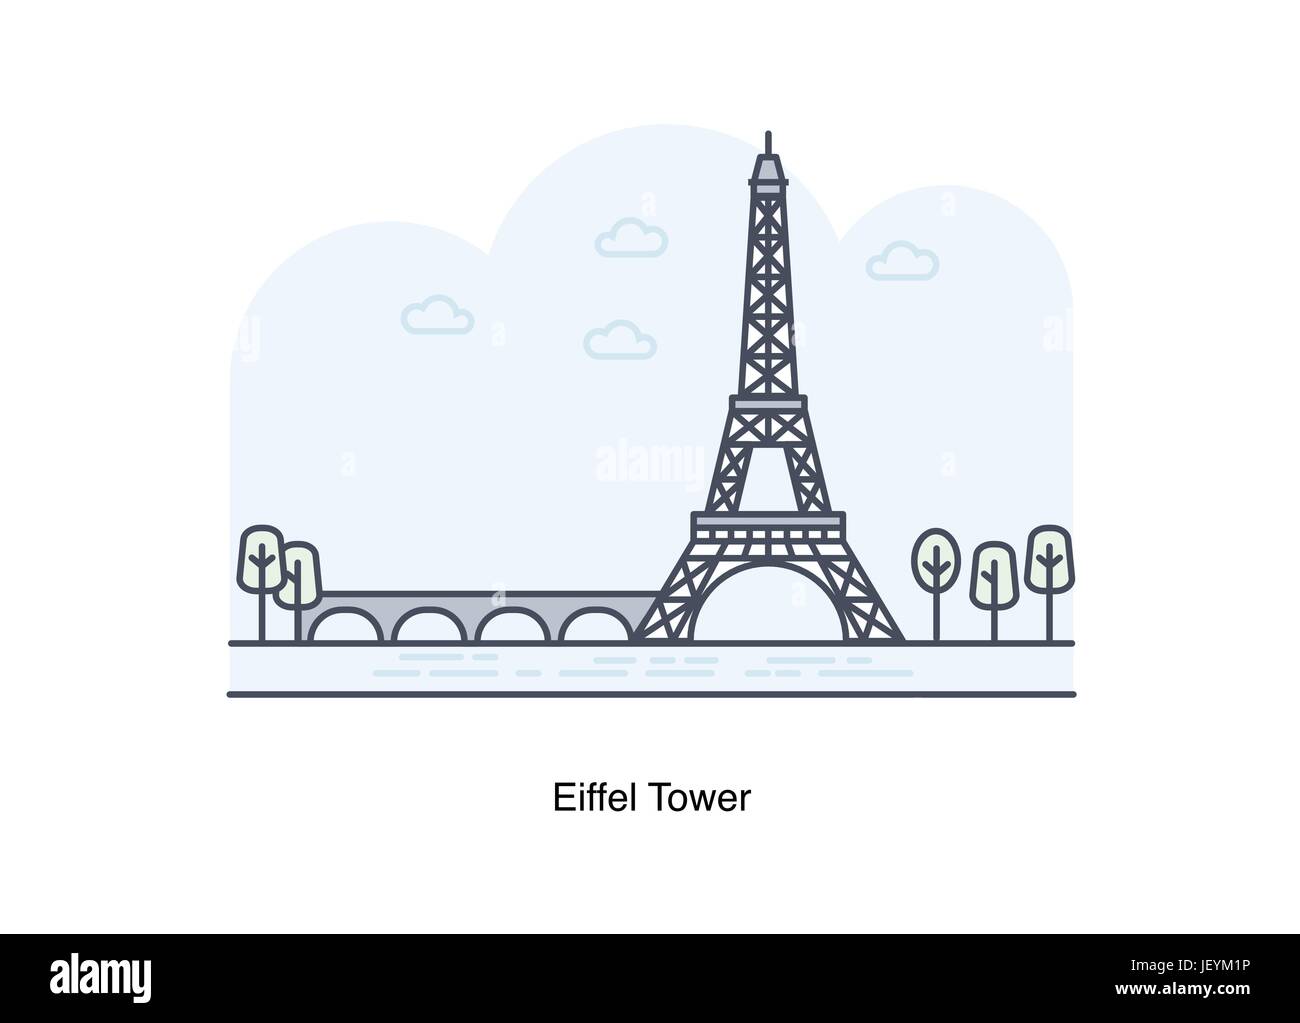 Vektorgrafik-Linie von Eiffelturm, Paris, Frankreich. Stock Vektor